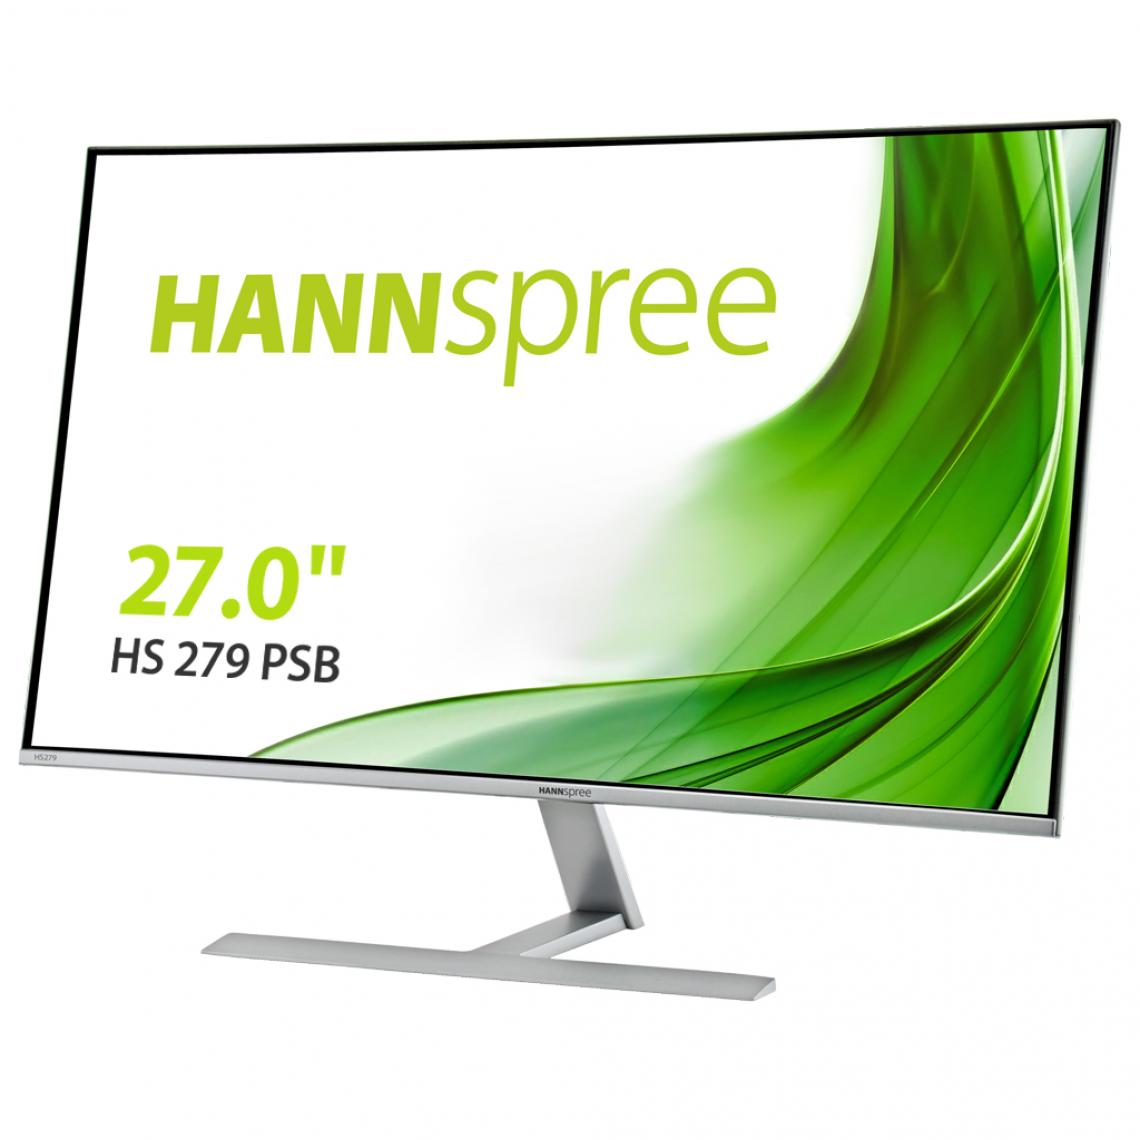 Hannspree - Hannspree HS279PSB LED display - Moniteur PC